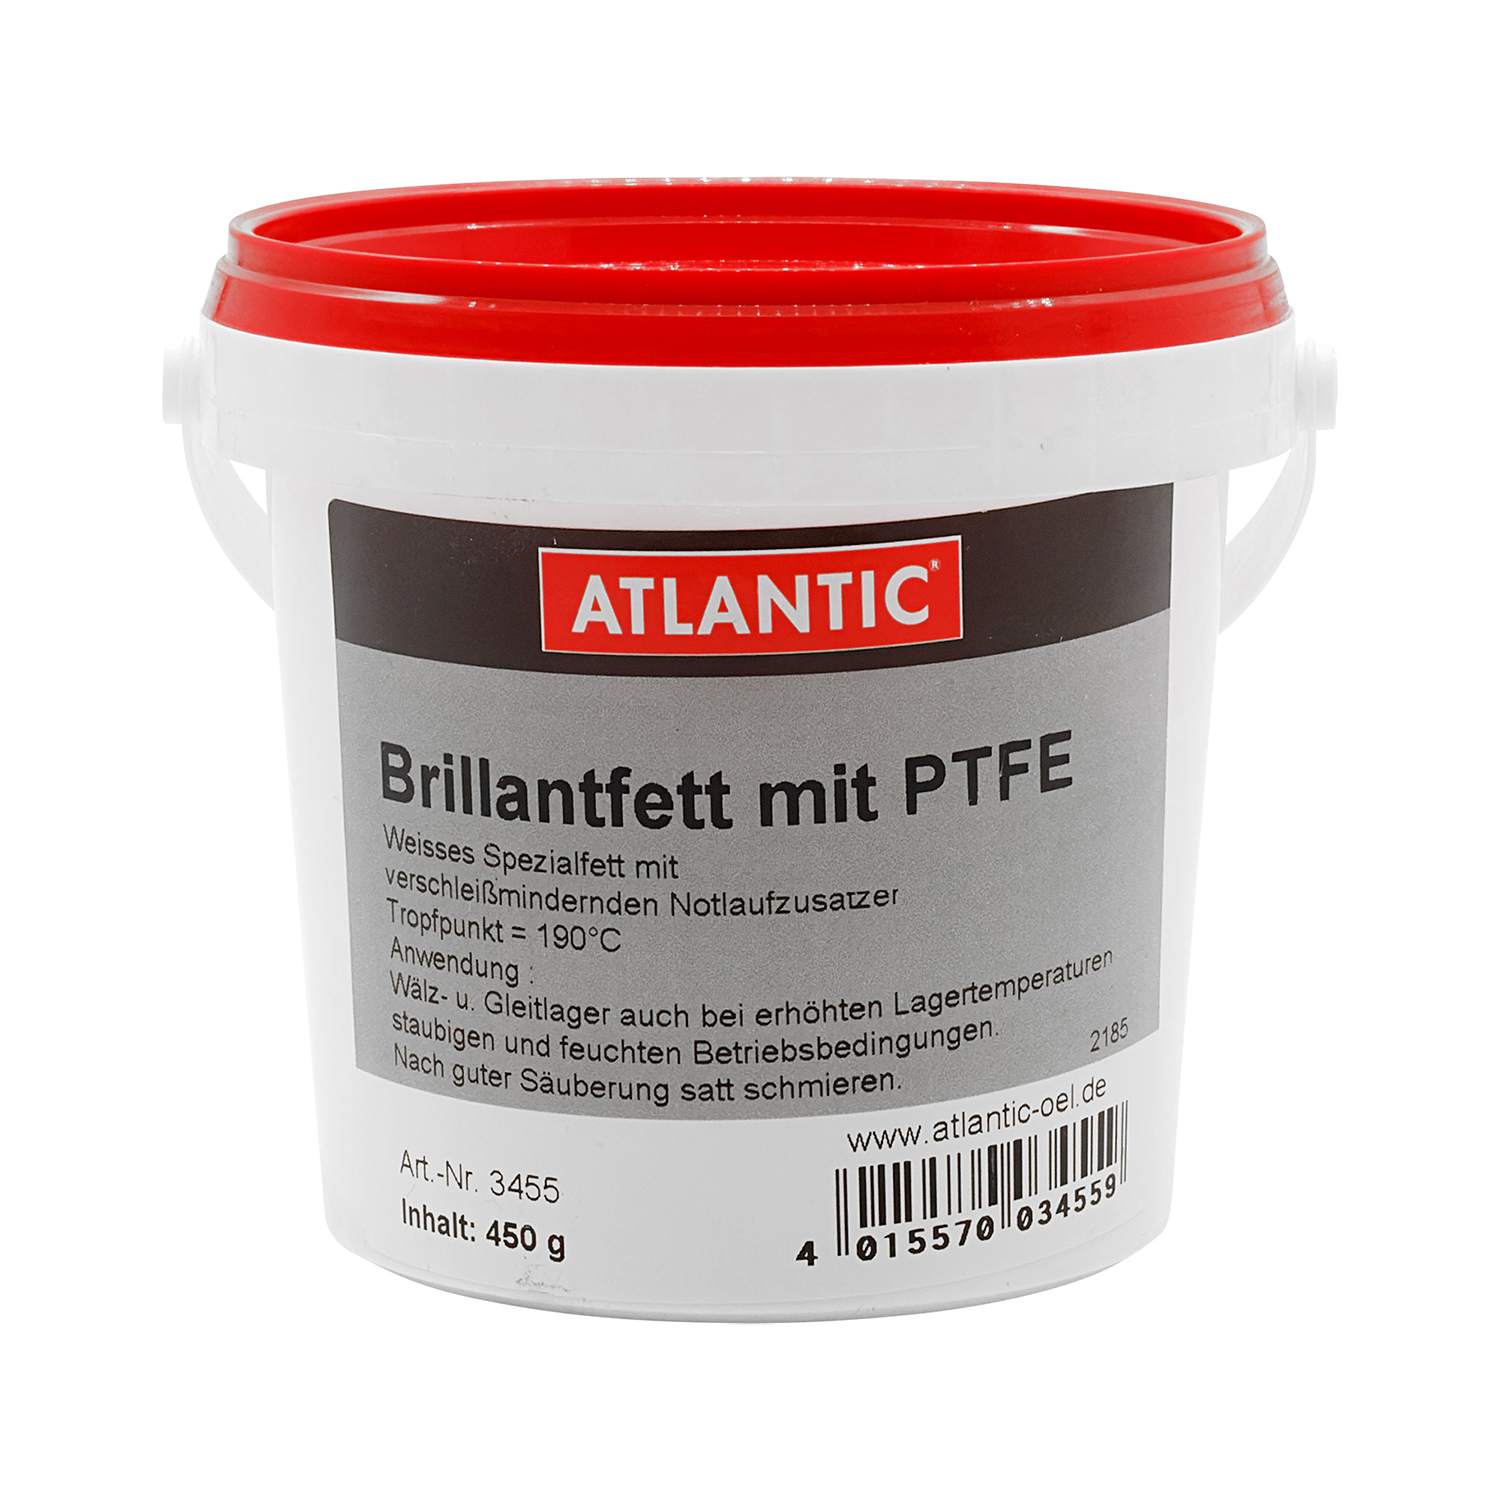 Atlantic Brilliantfett mit PTFE 3455 450 g Eimer